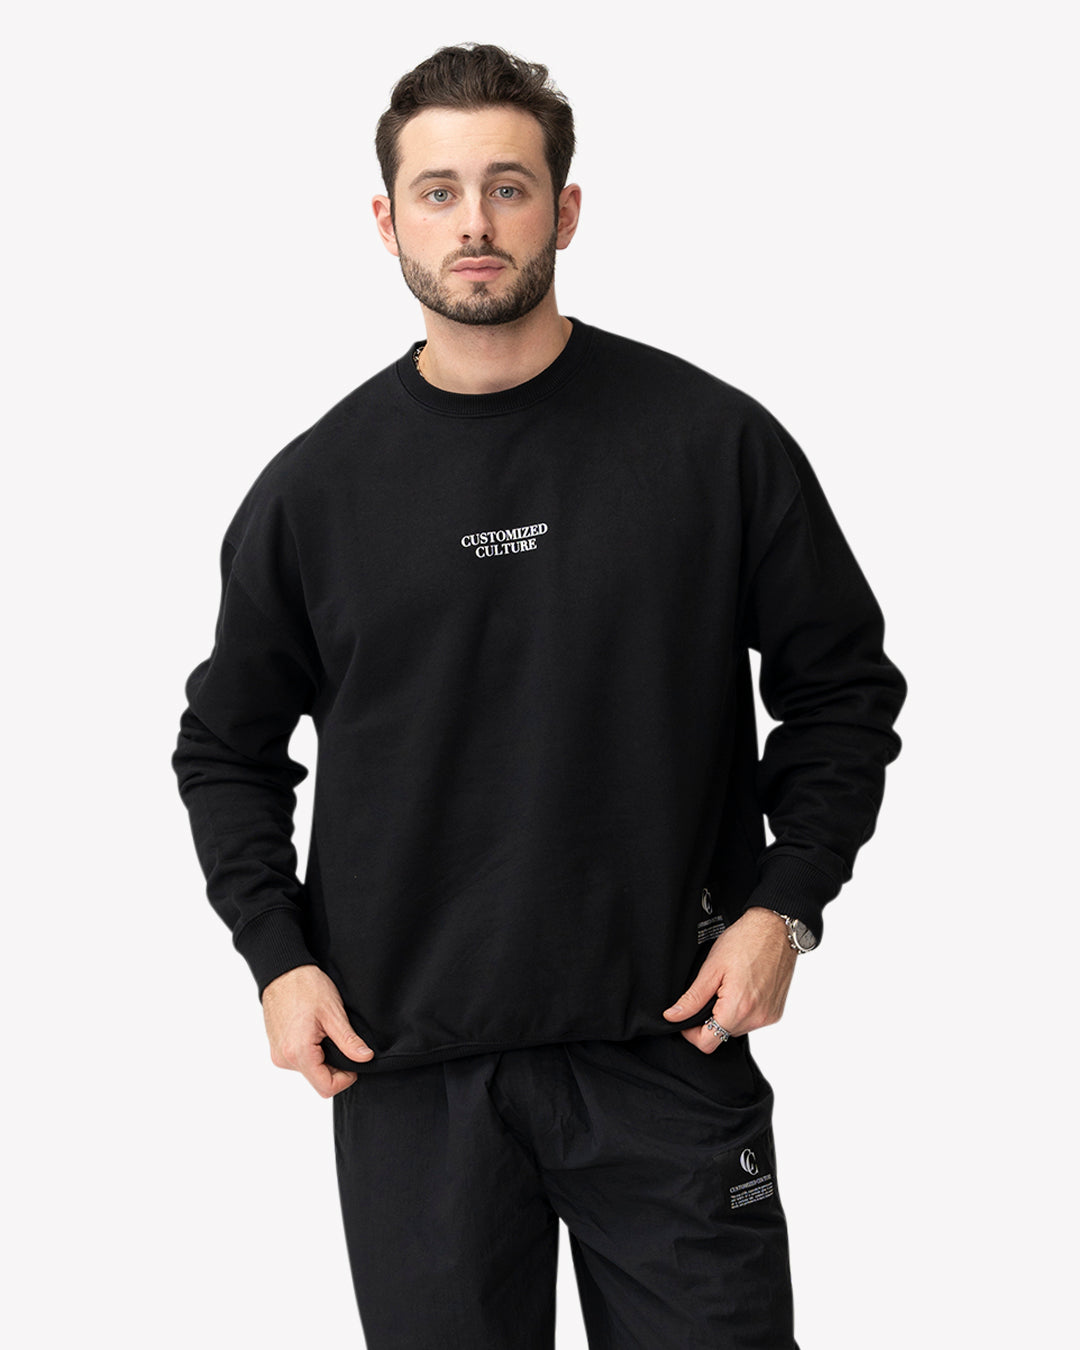 Culture Sweater Black | Customized Culture